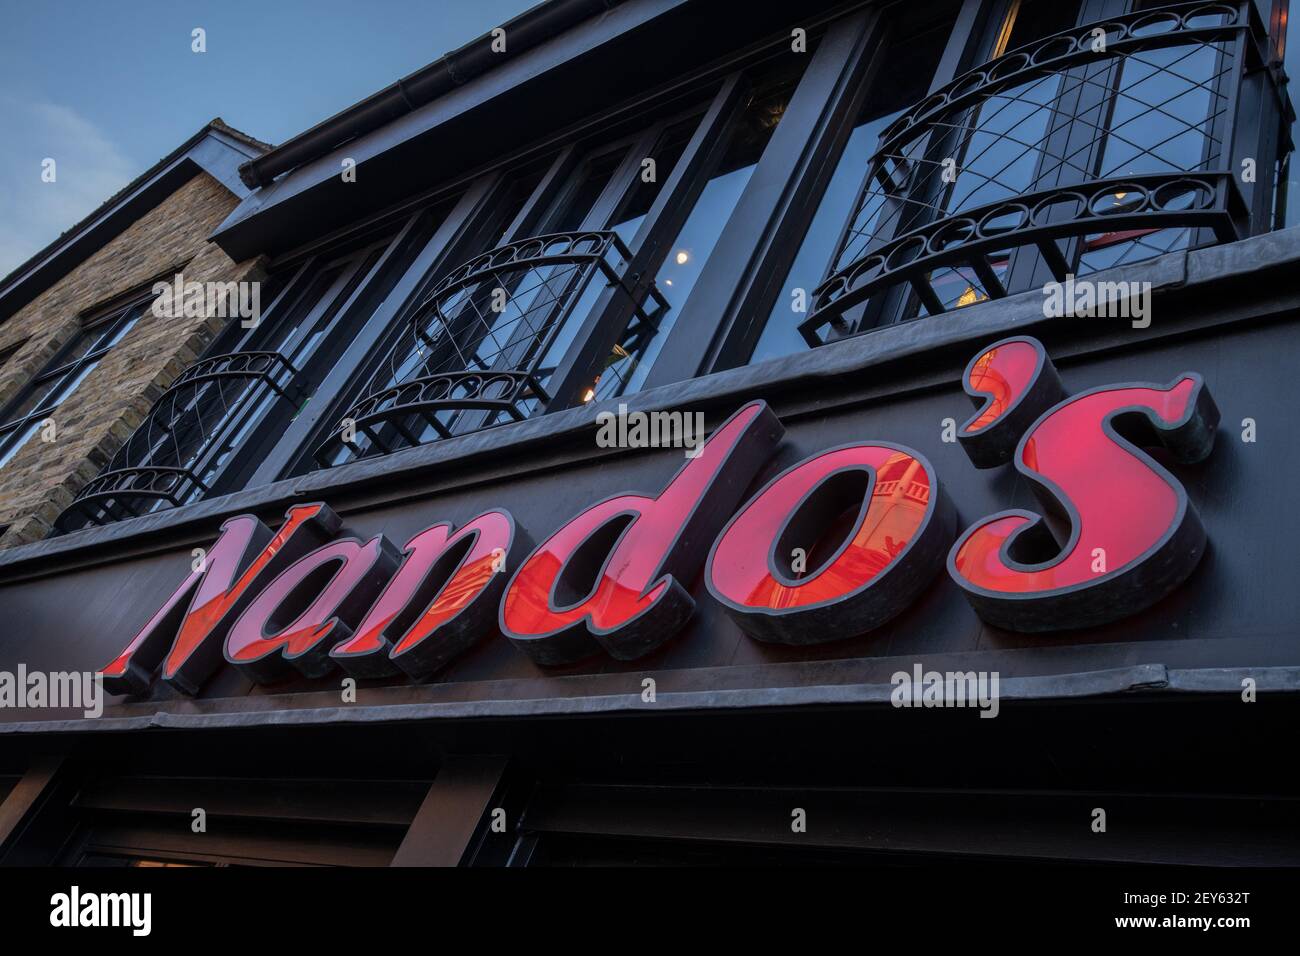 Nando's restaurant sign, Wimbledon, UK Stock Photo